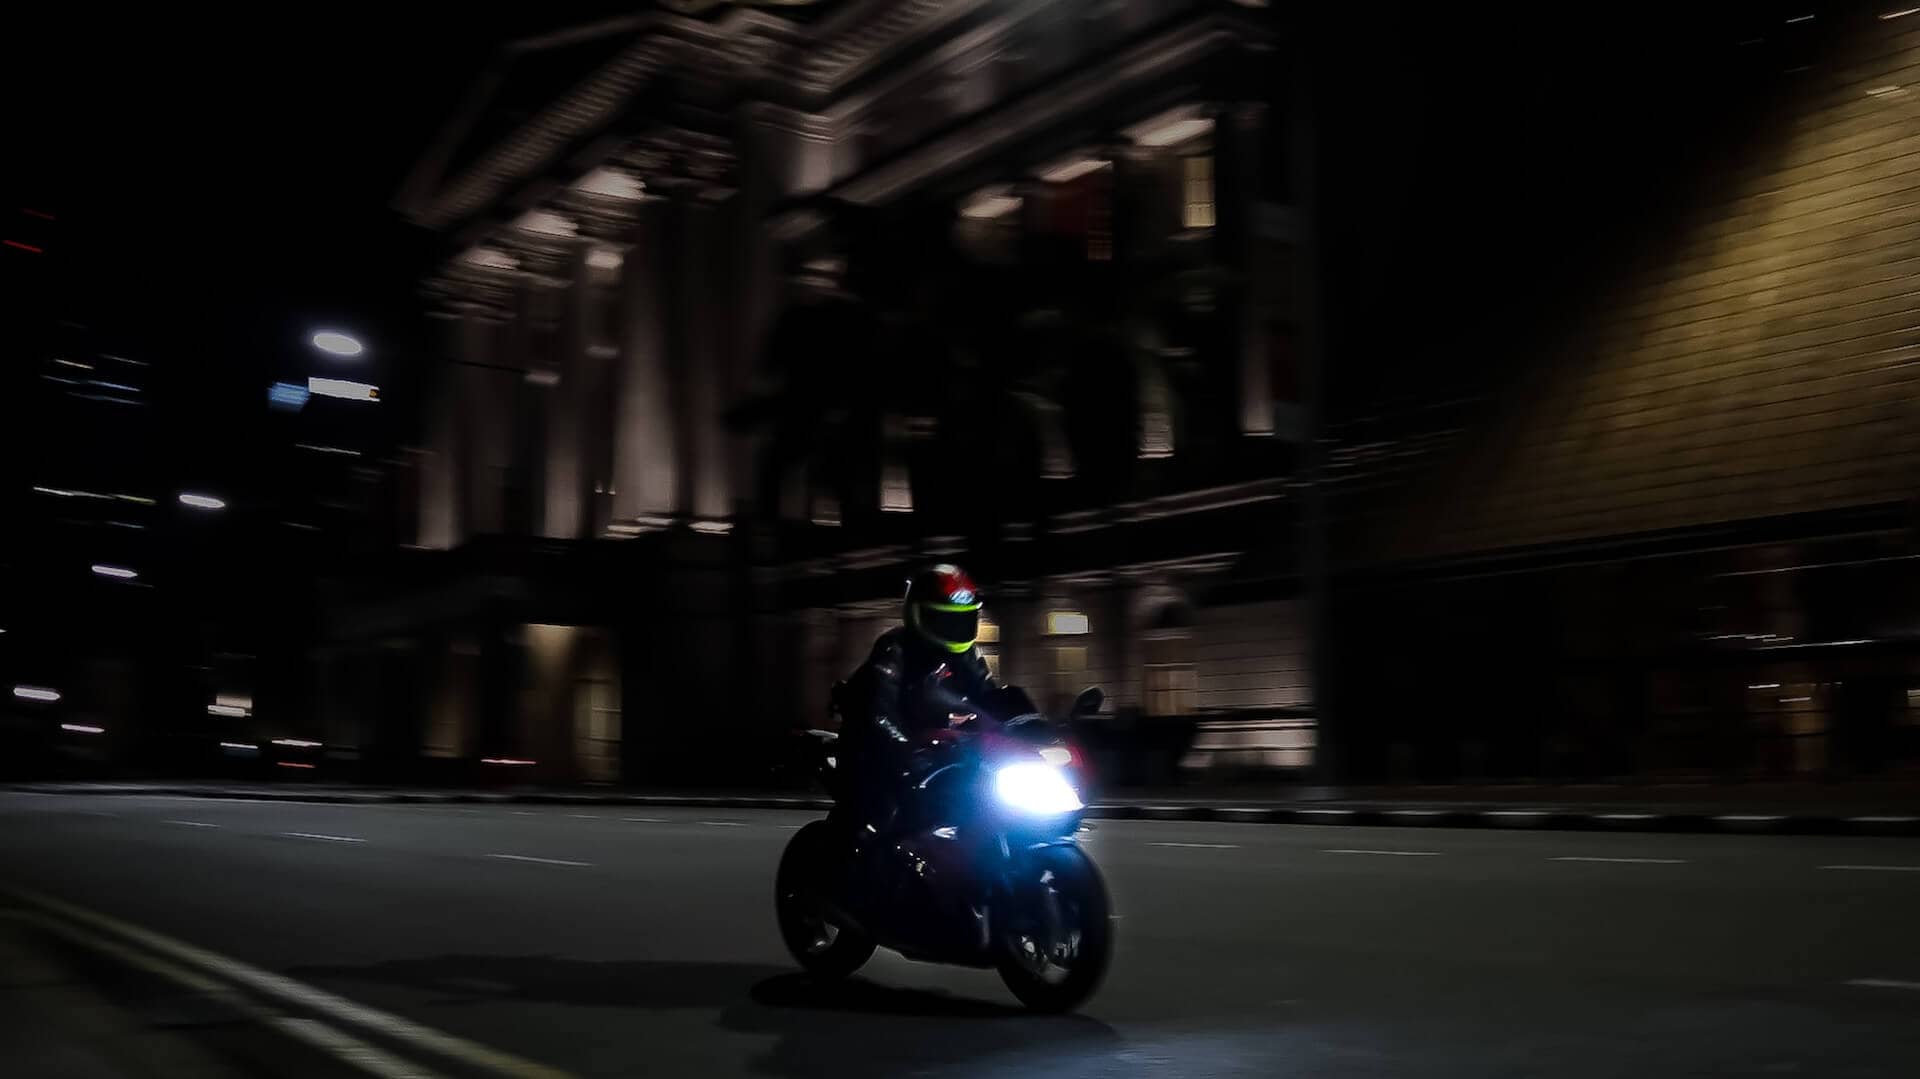 Someone riding a motorbike at night